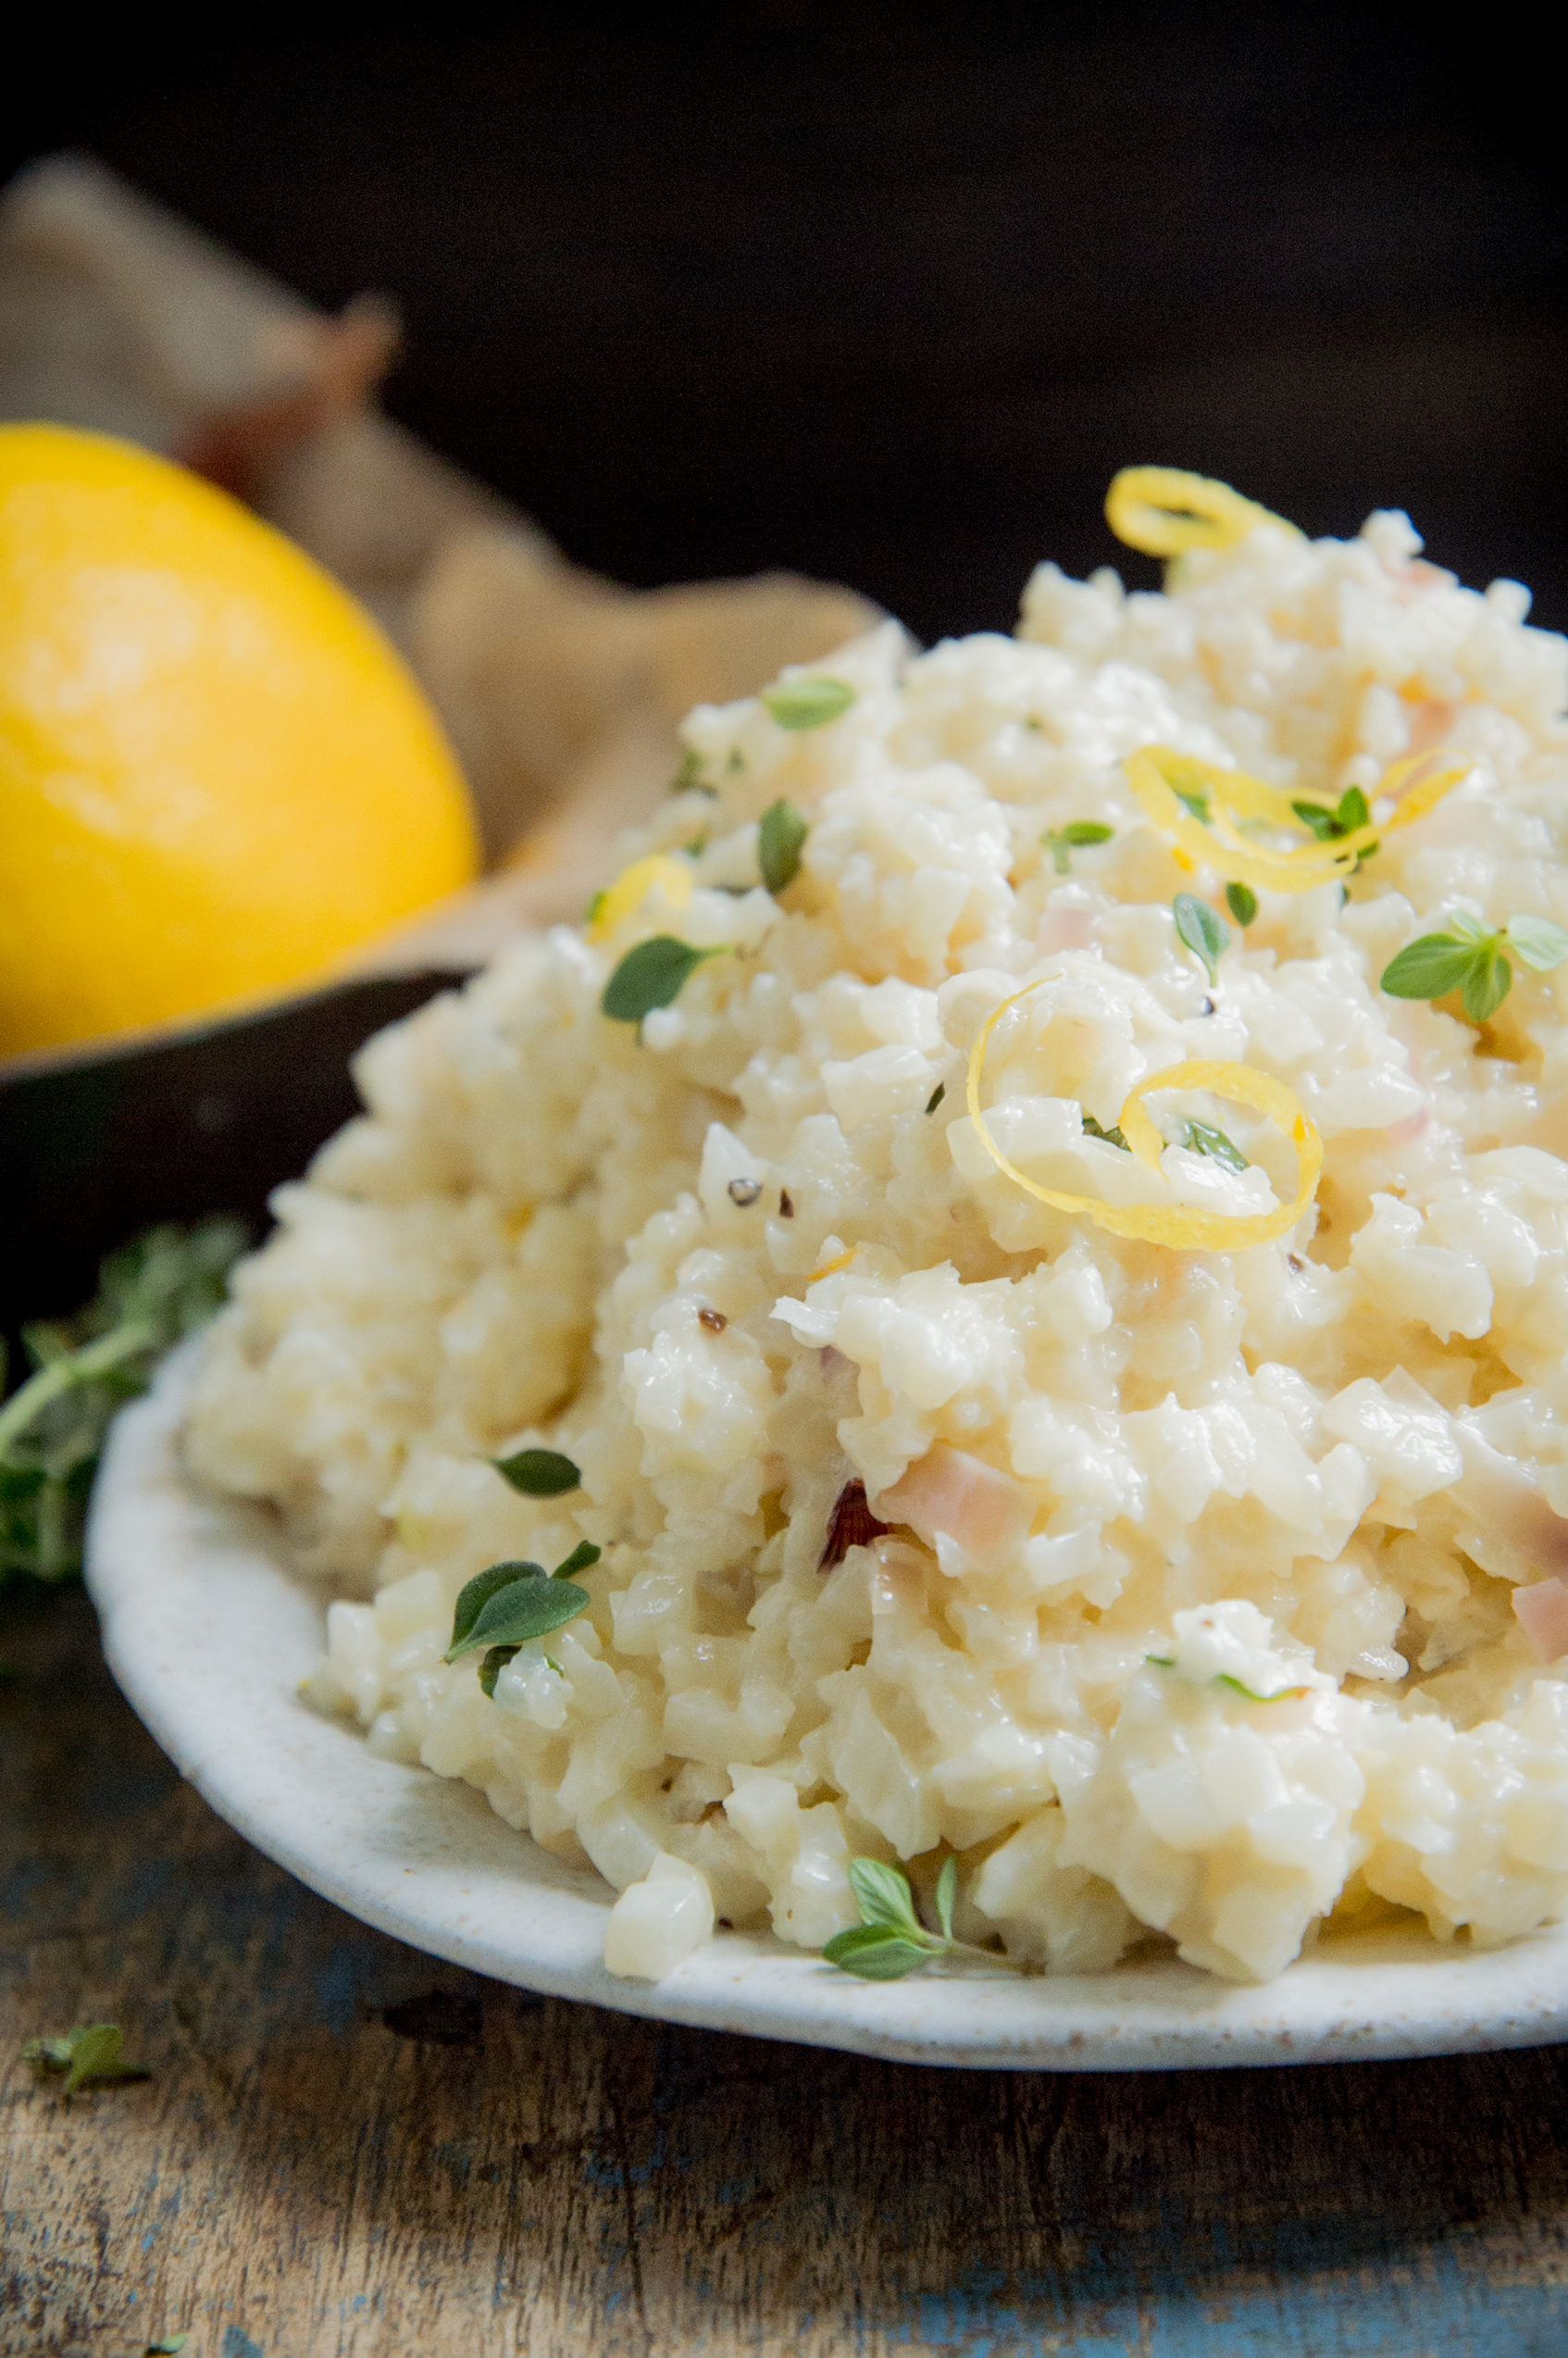 Cauliflower rice garnished with thyme and lemon zest.